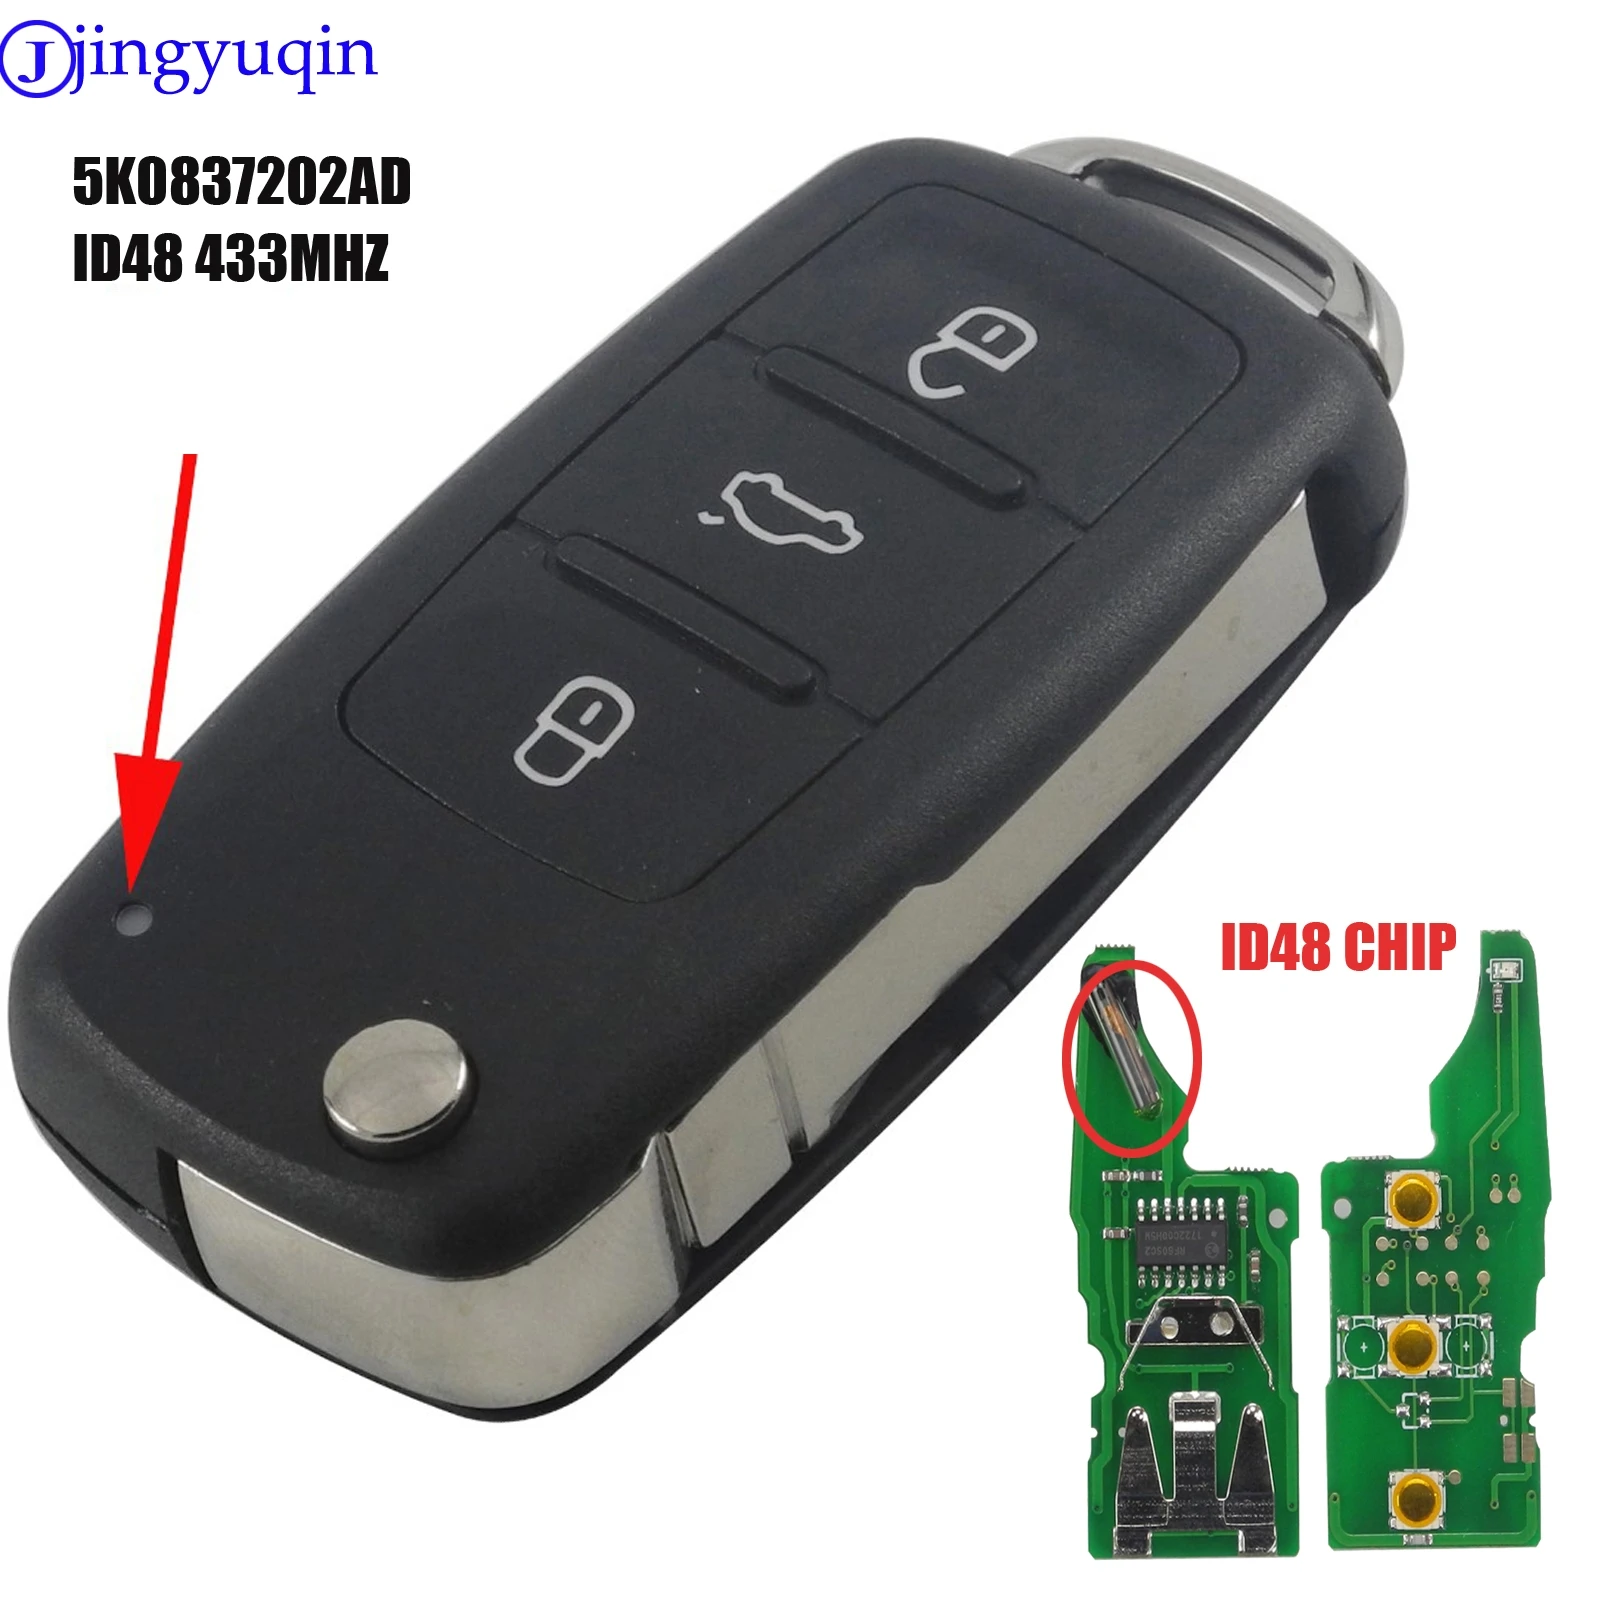 Jingyuqin 10p 434 МГц с ID48 чипом 3B дистанционный ключ для VW Volkswagen GOLF PASSAT Tiguan Polo Jetta Beetle Hella 5K0837202AD